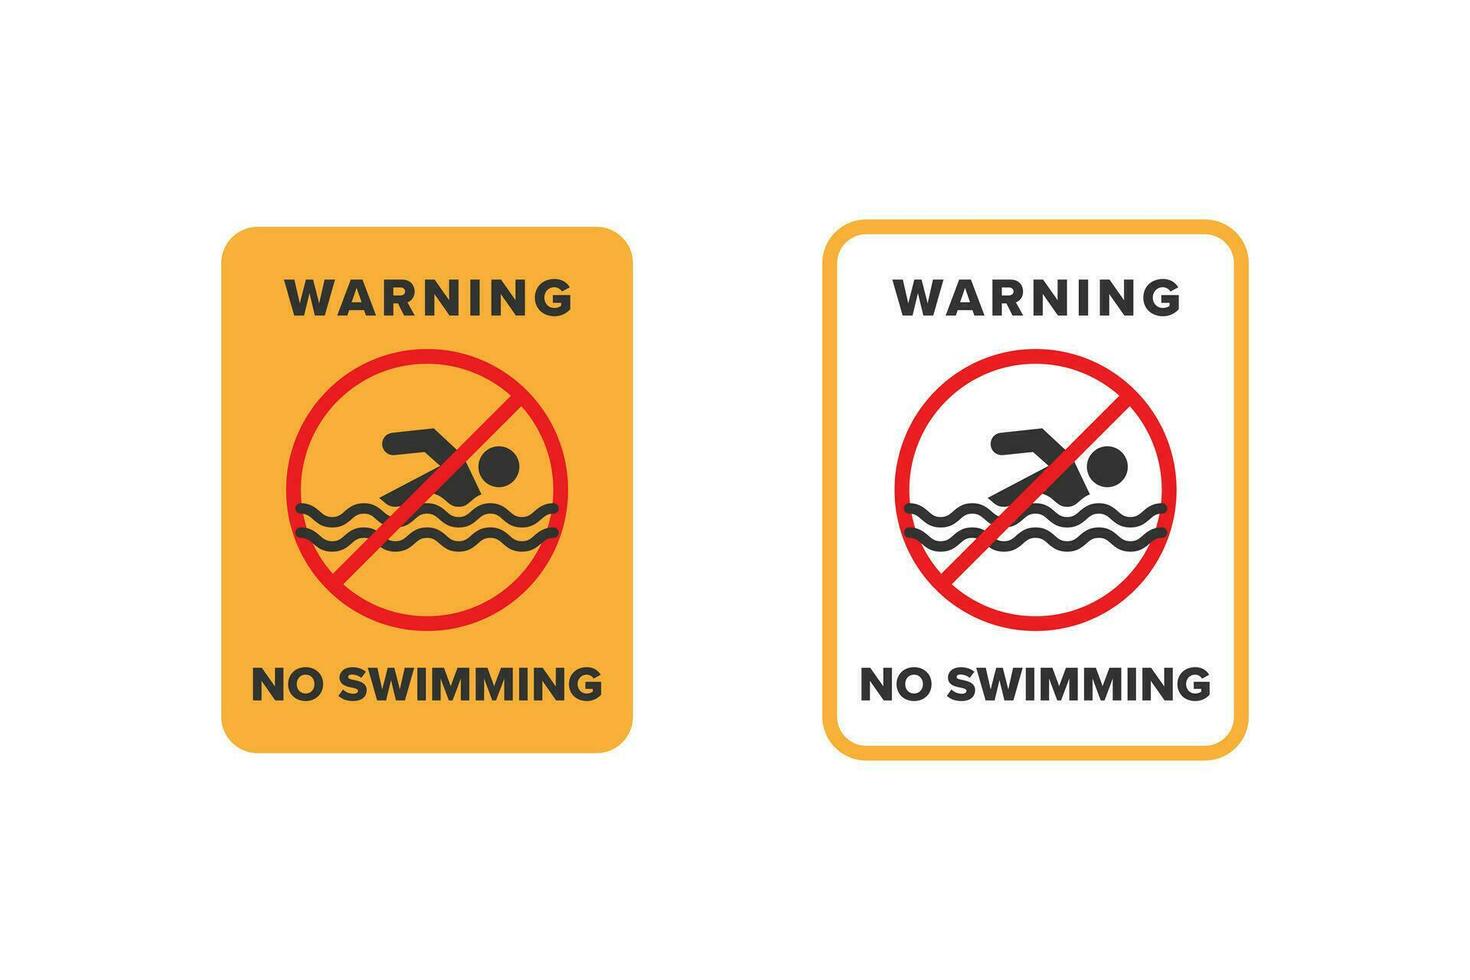 No swimming icon sign vector design, dangerous area icon board for swimming activity